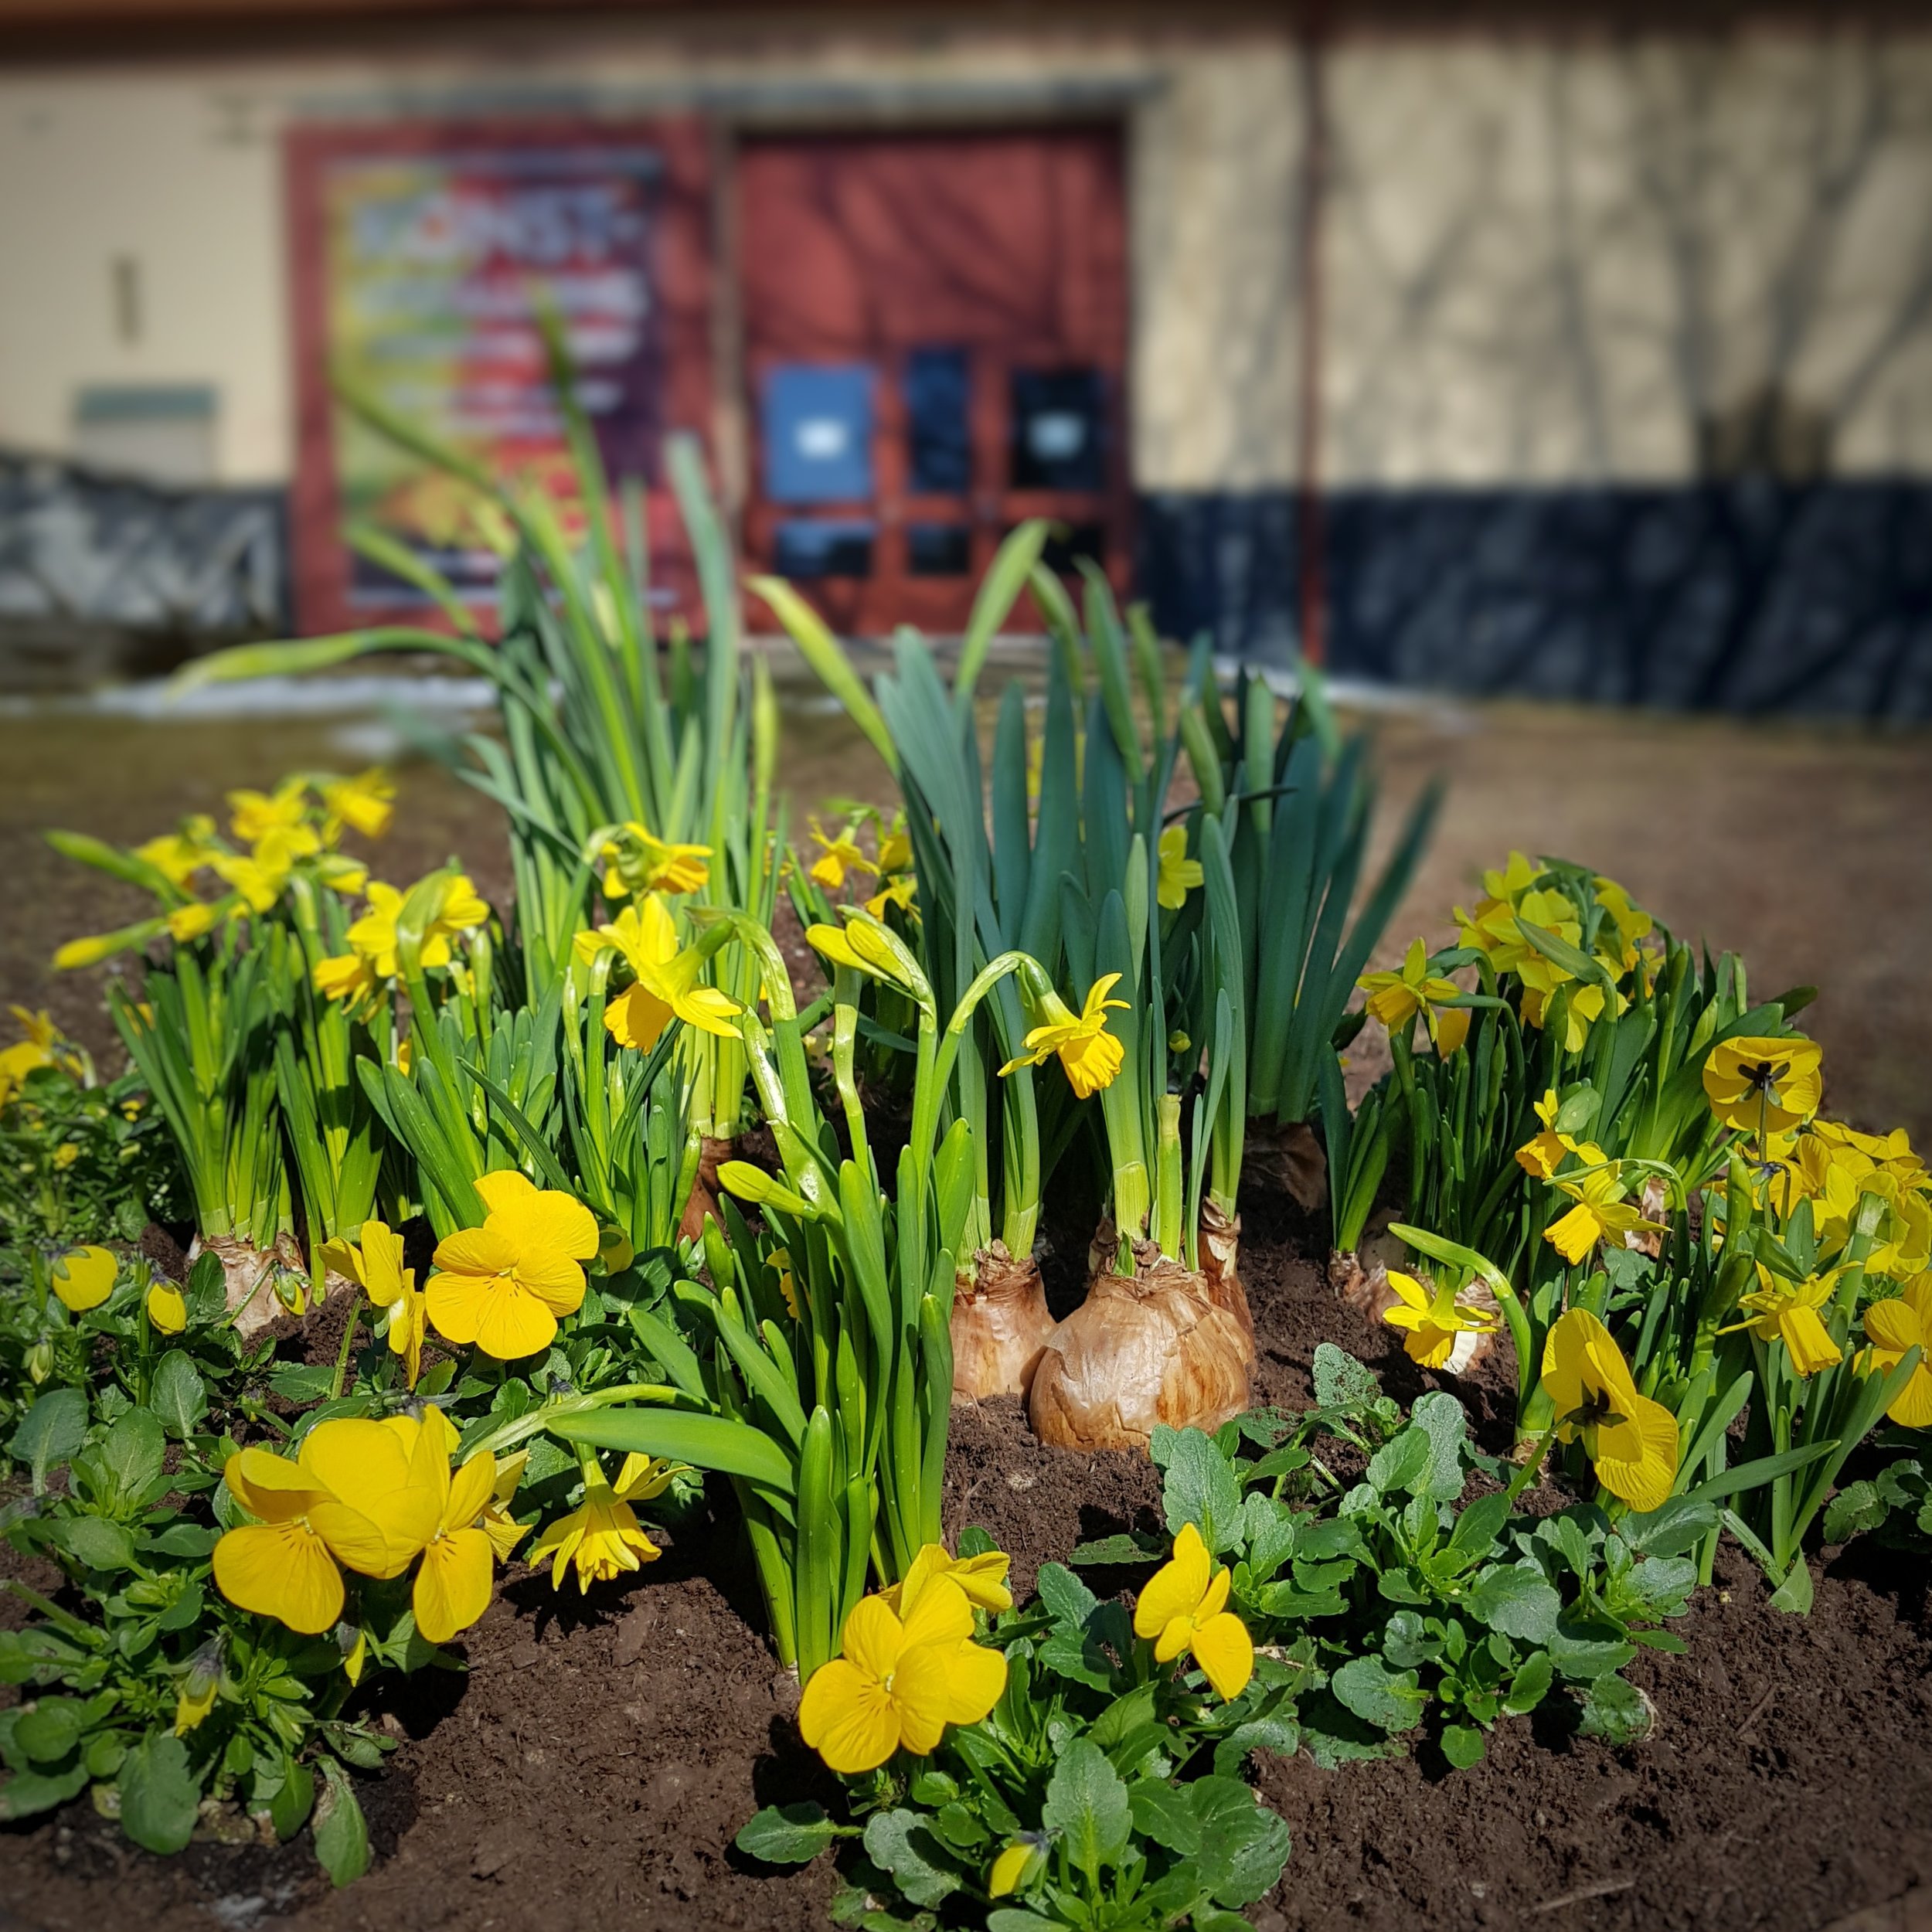 Day 92 - April 2: Daffodils in the sun